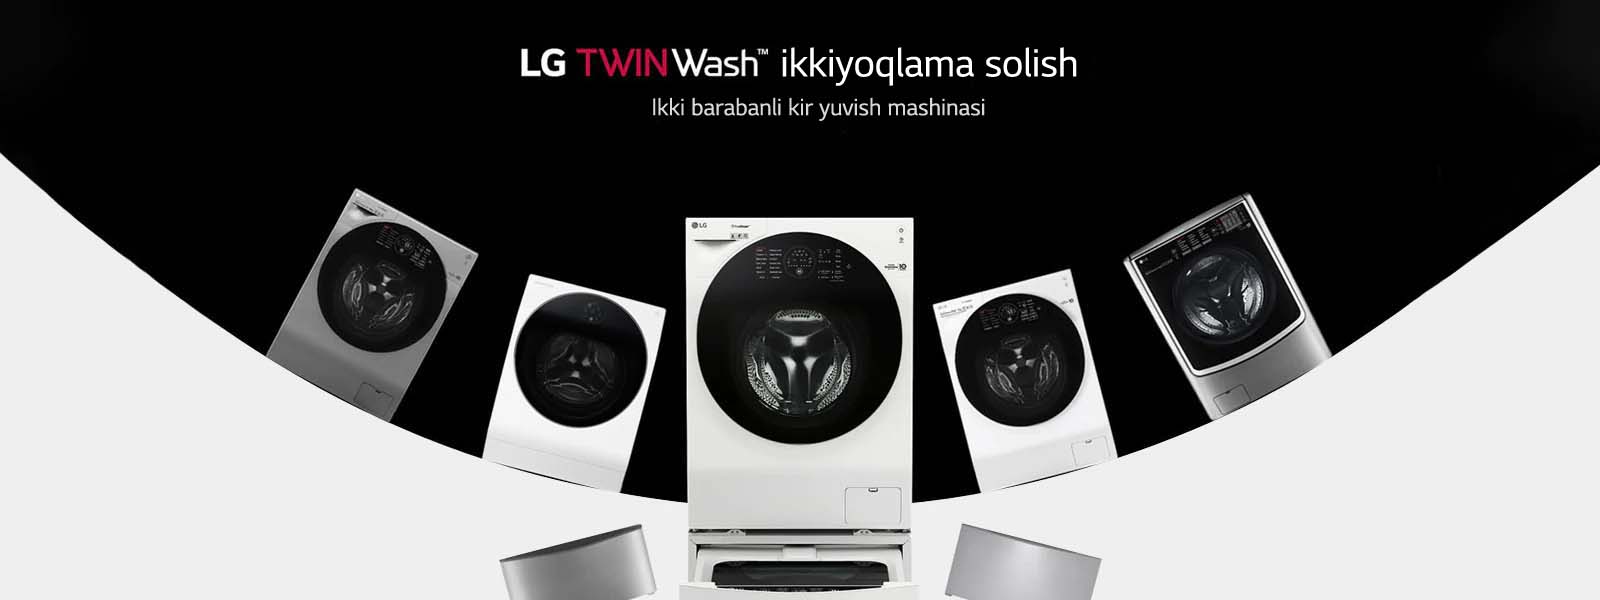 LG_TWINWash-10062019